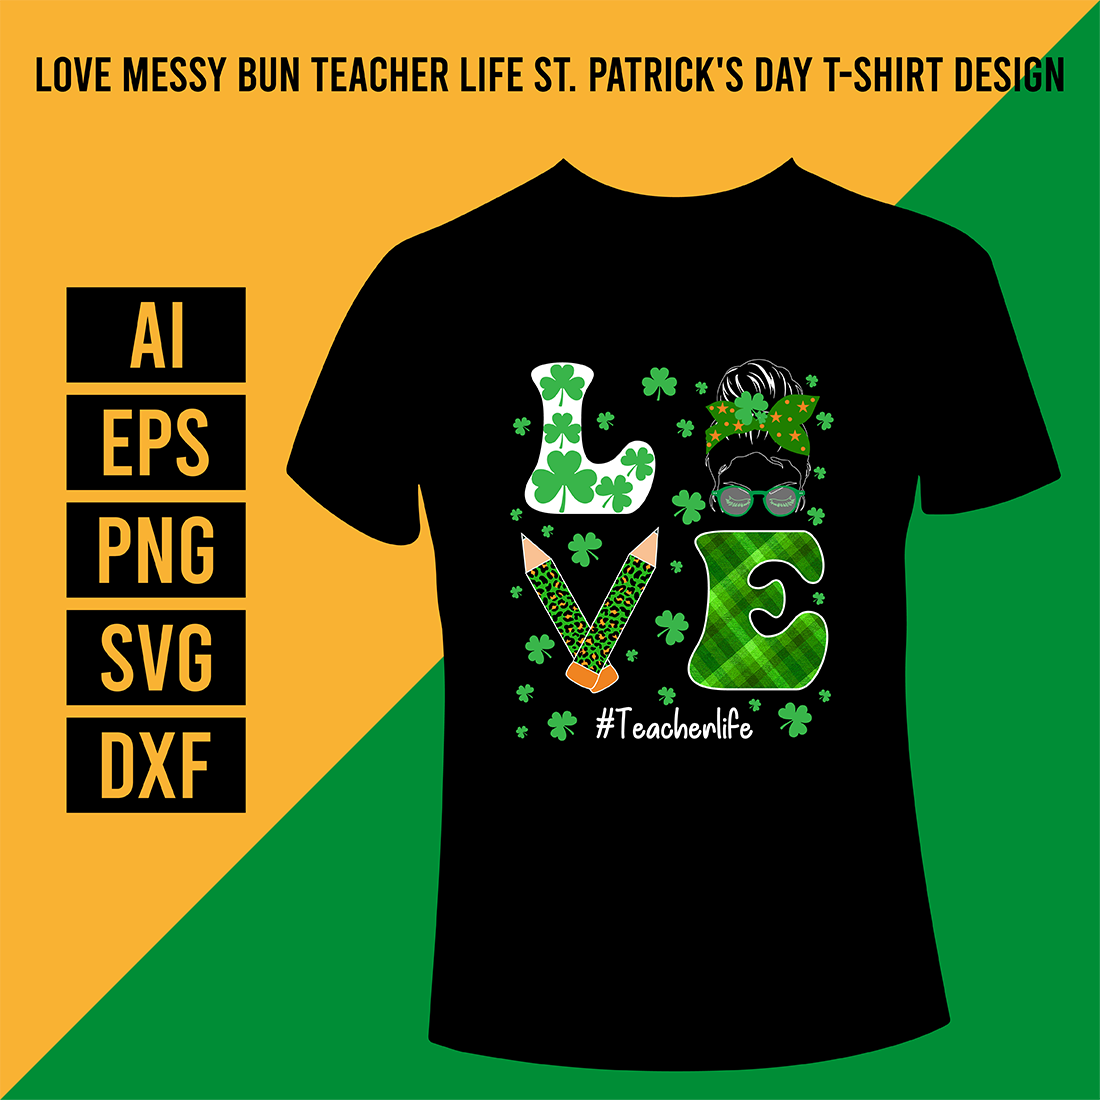 Love Messy Bun Teacher Life St Patrick's Day T-Shirt Design cover image.